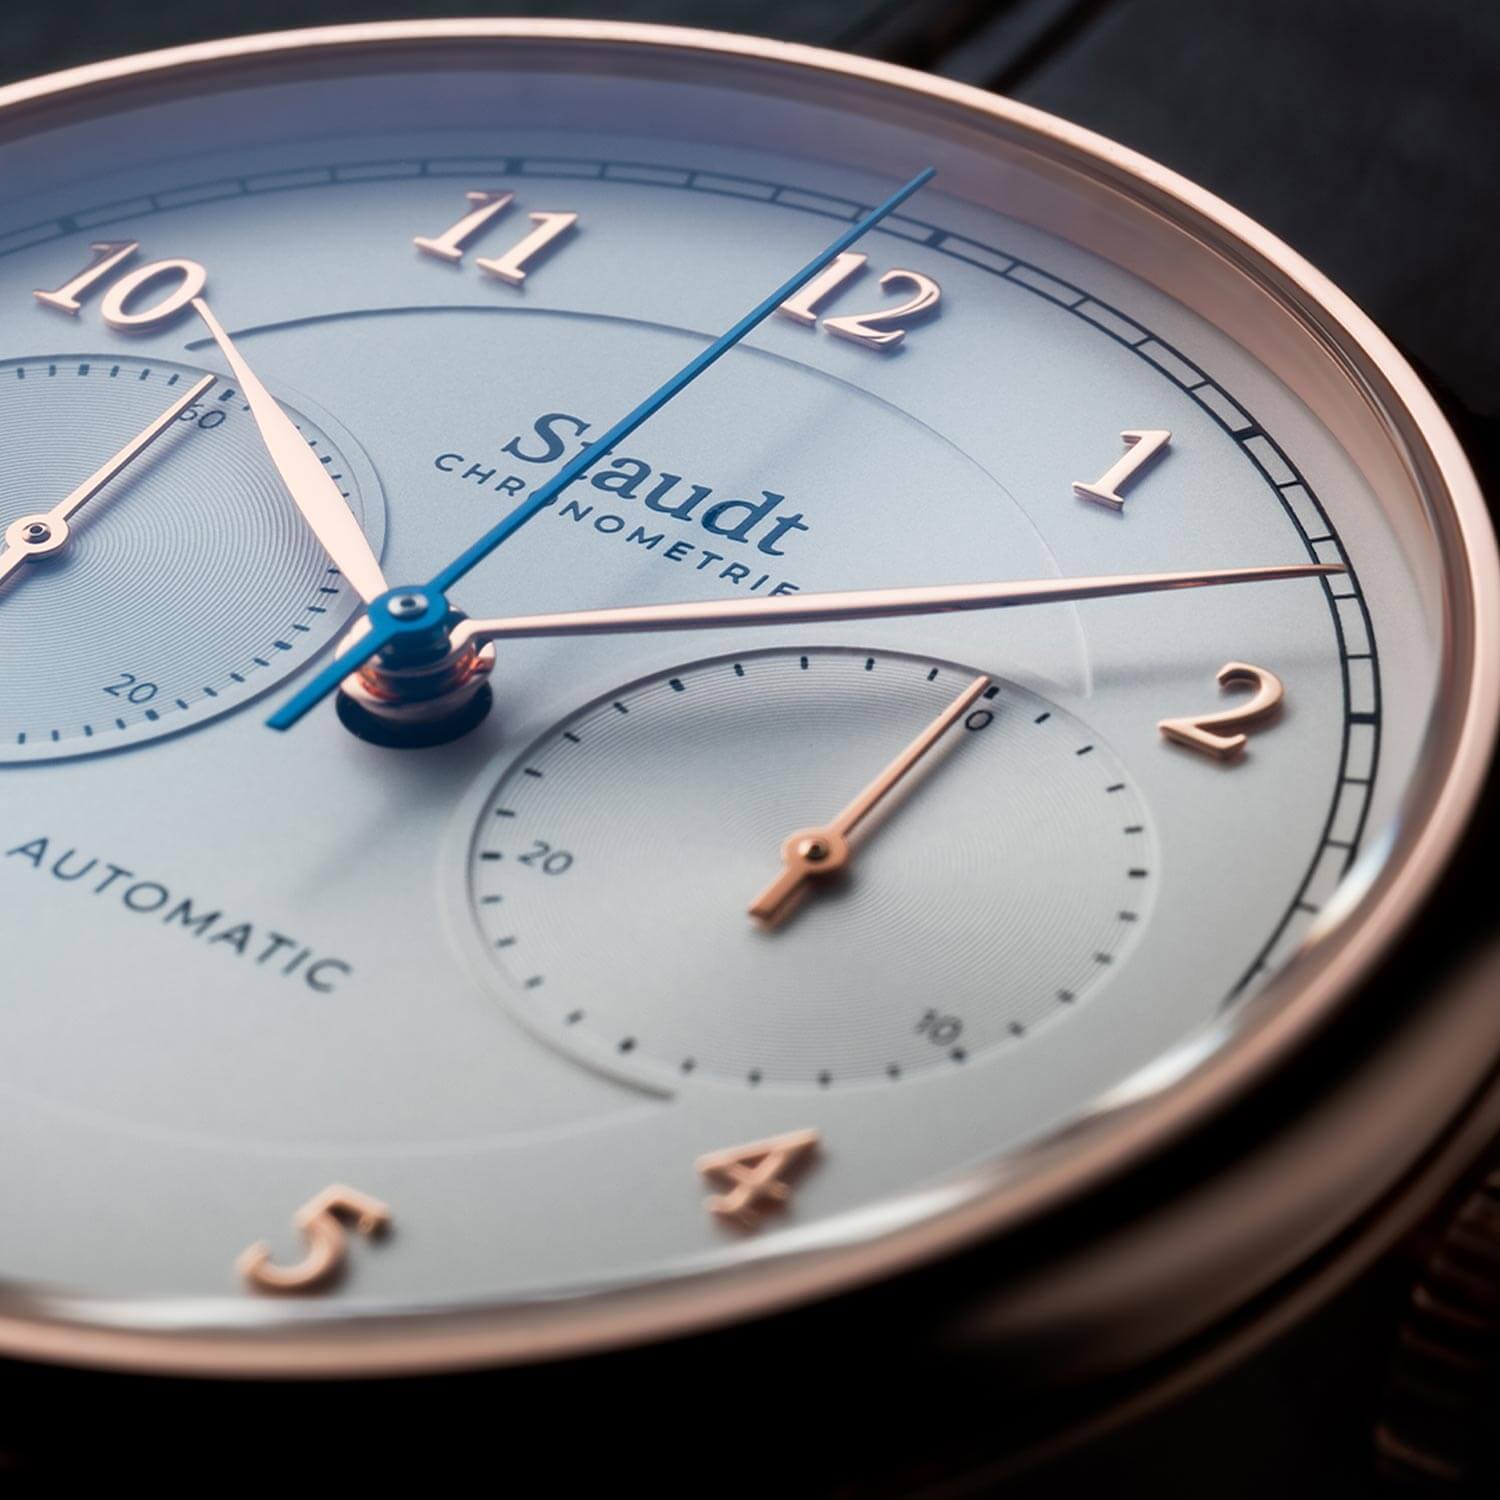 Staudt Prelude gold gold chronograph mechanical swiss made watch close up